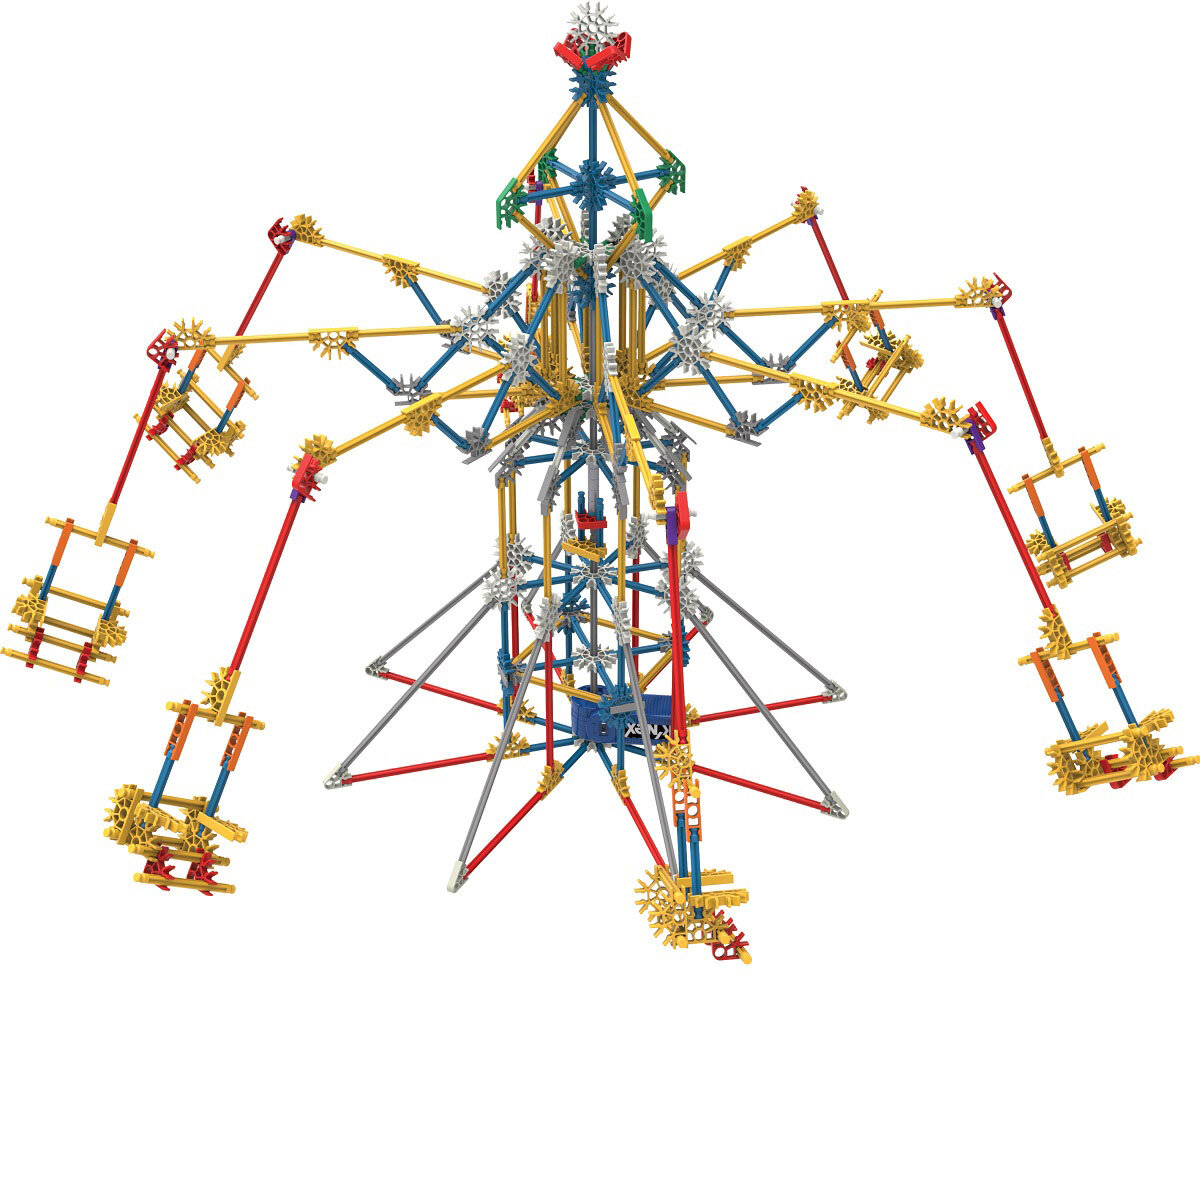 Buy K'nex 3 in 1 Classic Amusement Park Set Overview Image at Costco.co.uk